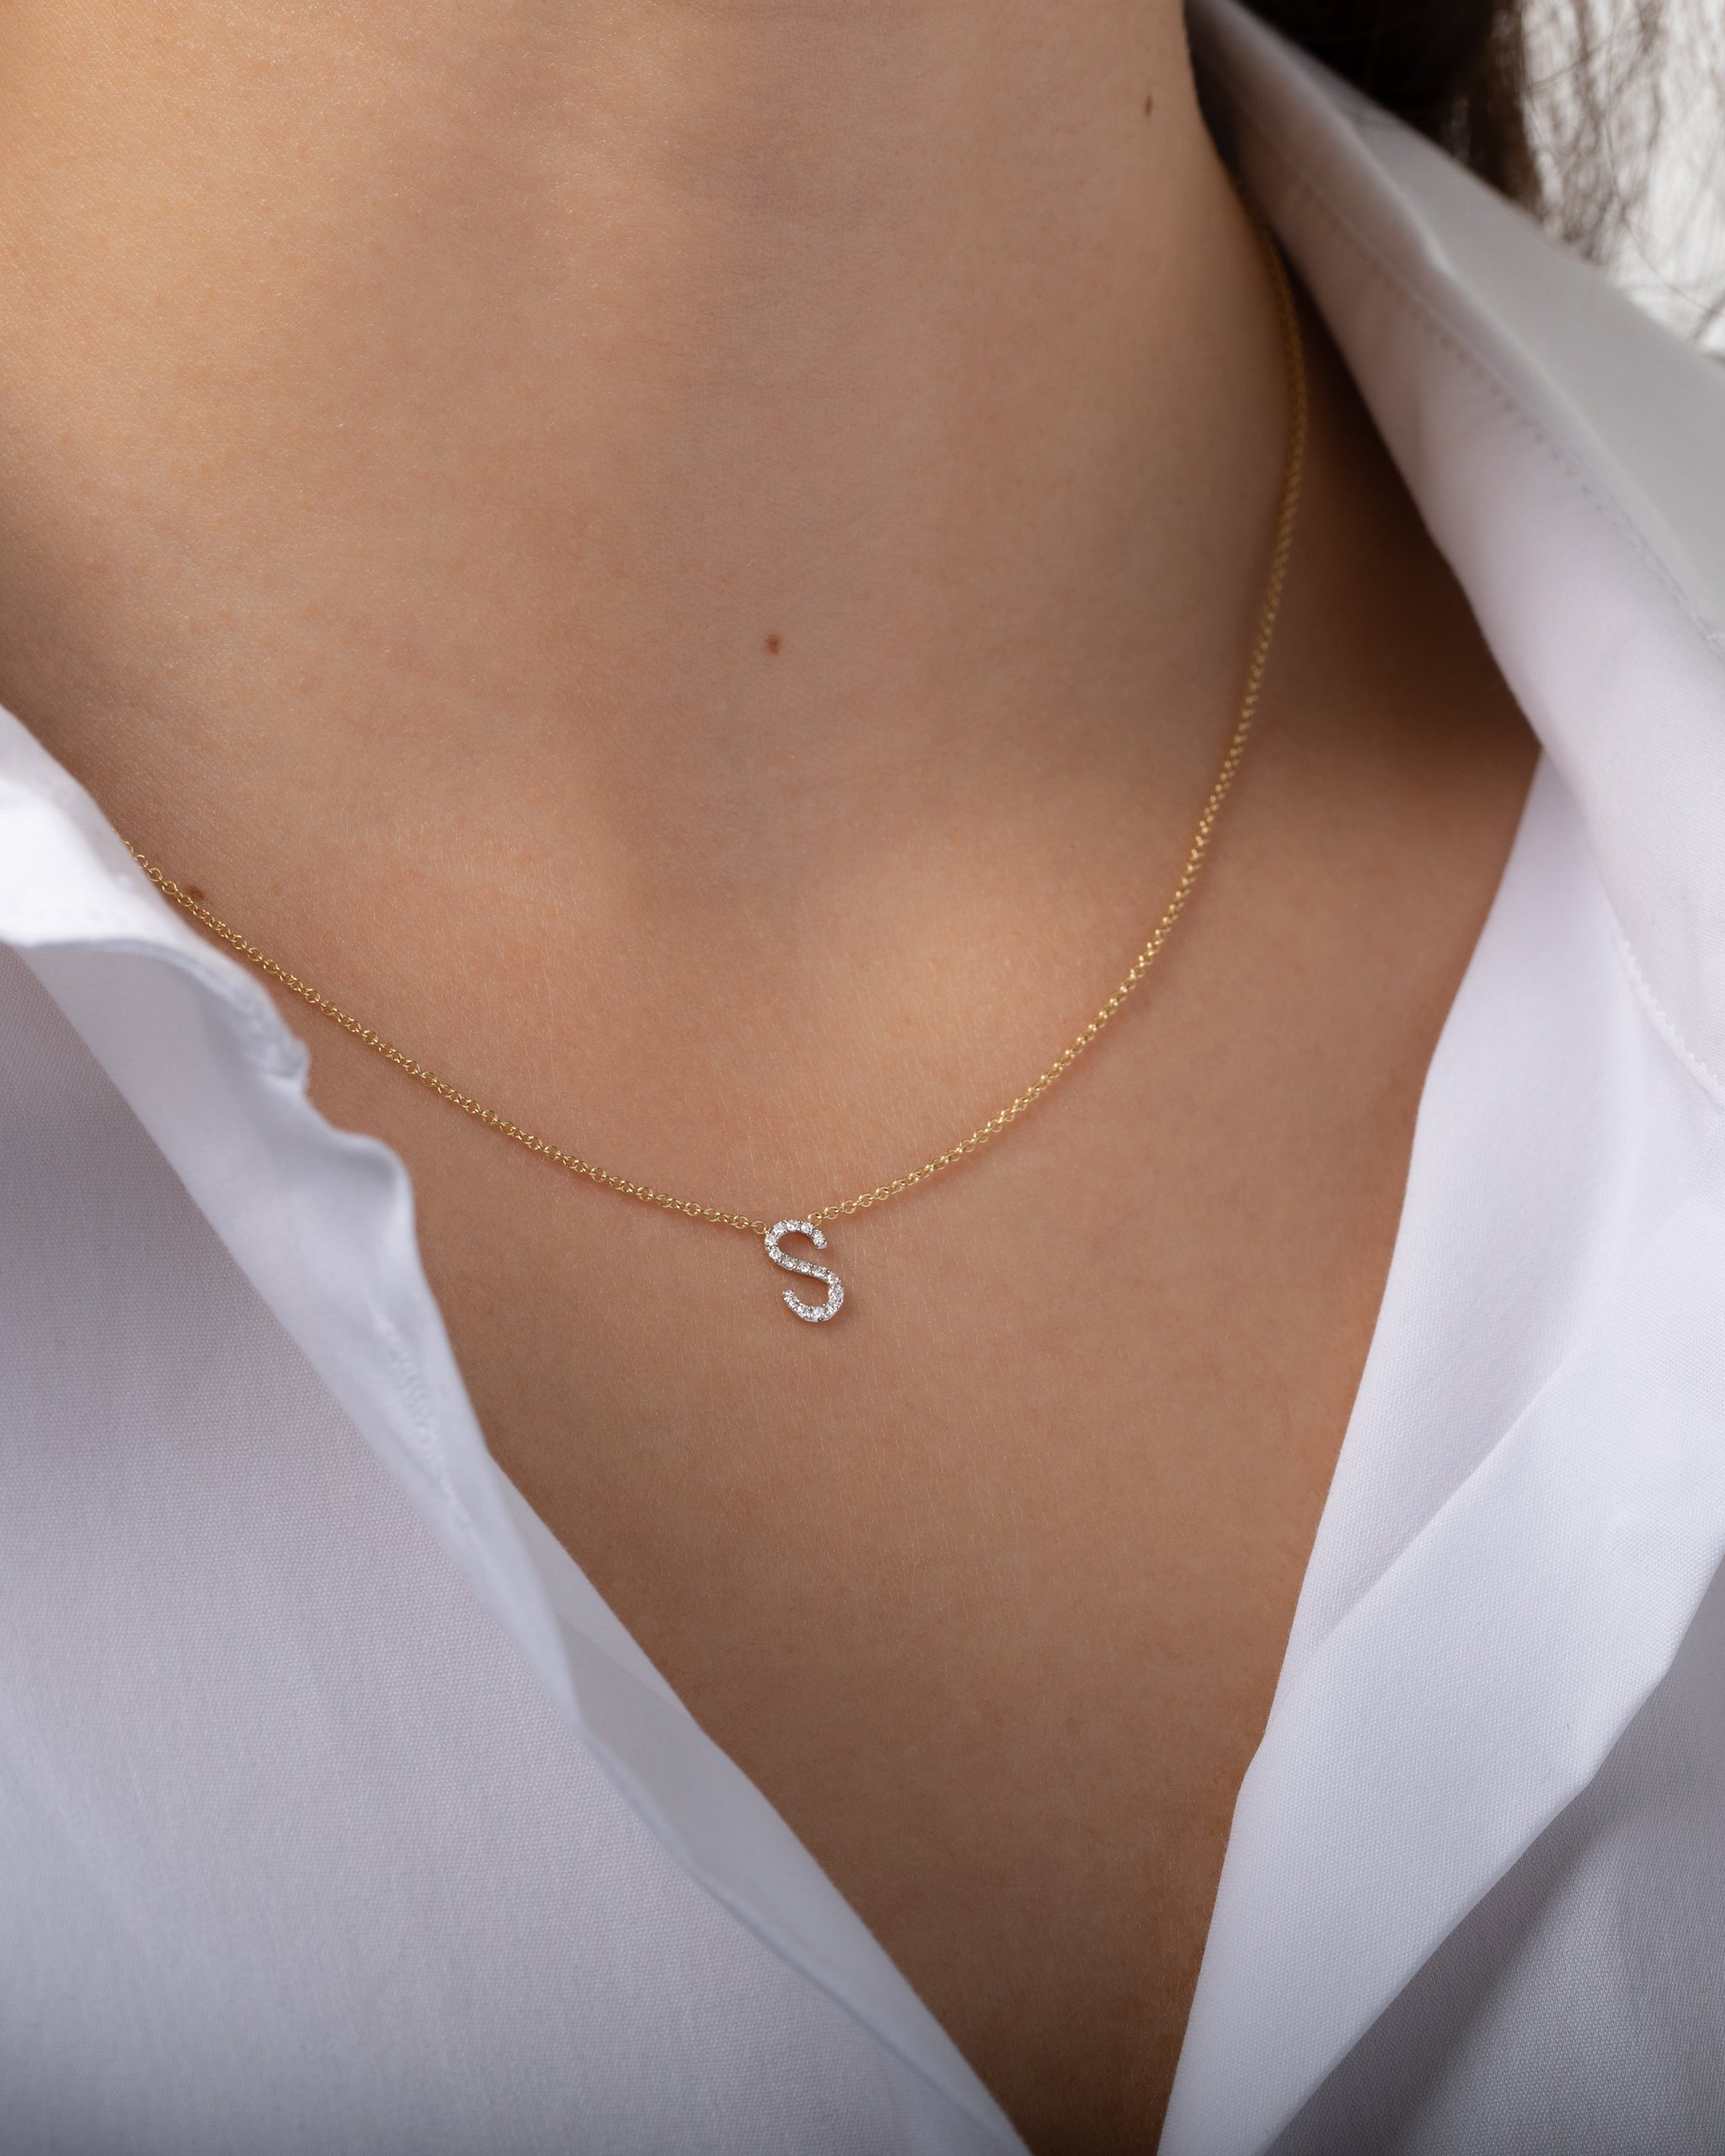 Diamond initial Letter Necklace pendant W